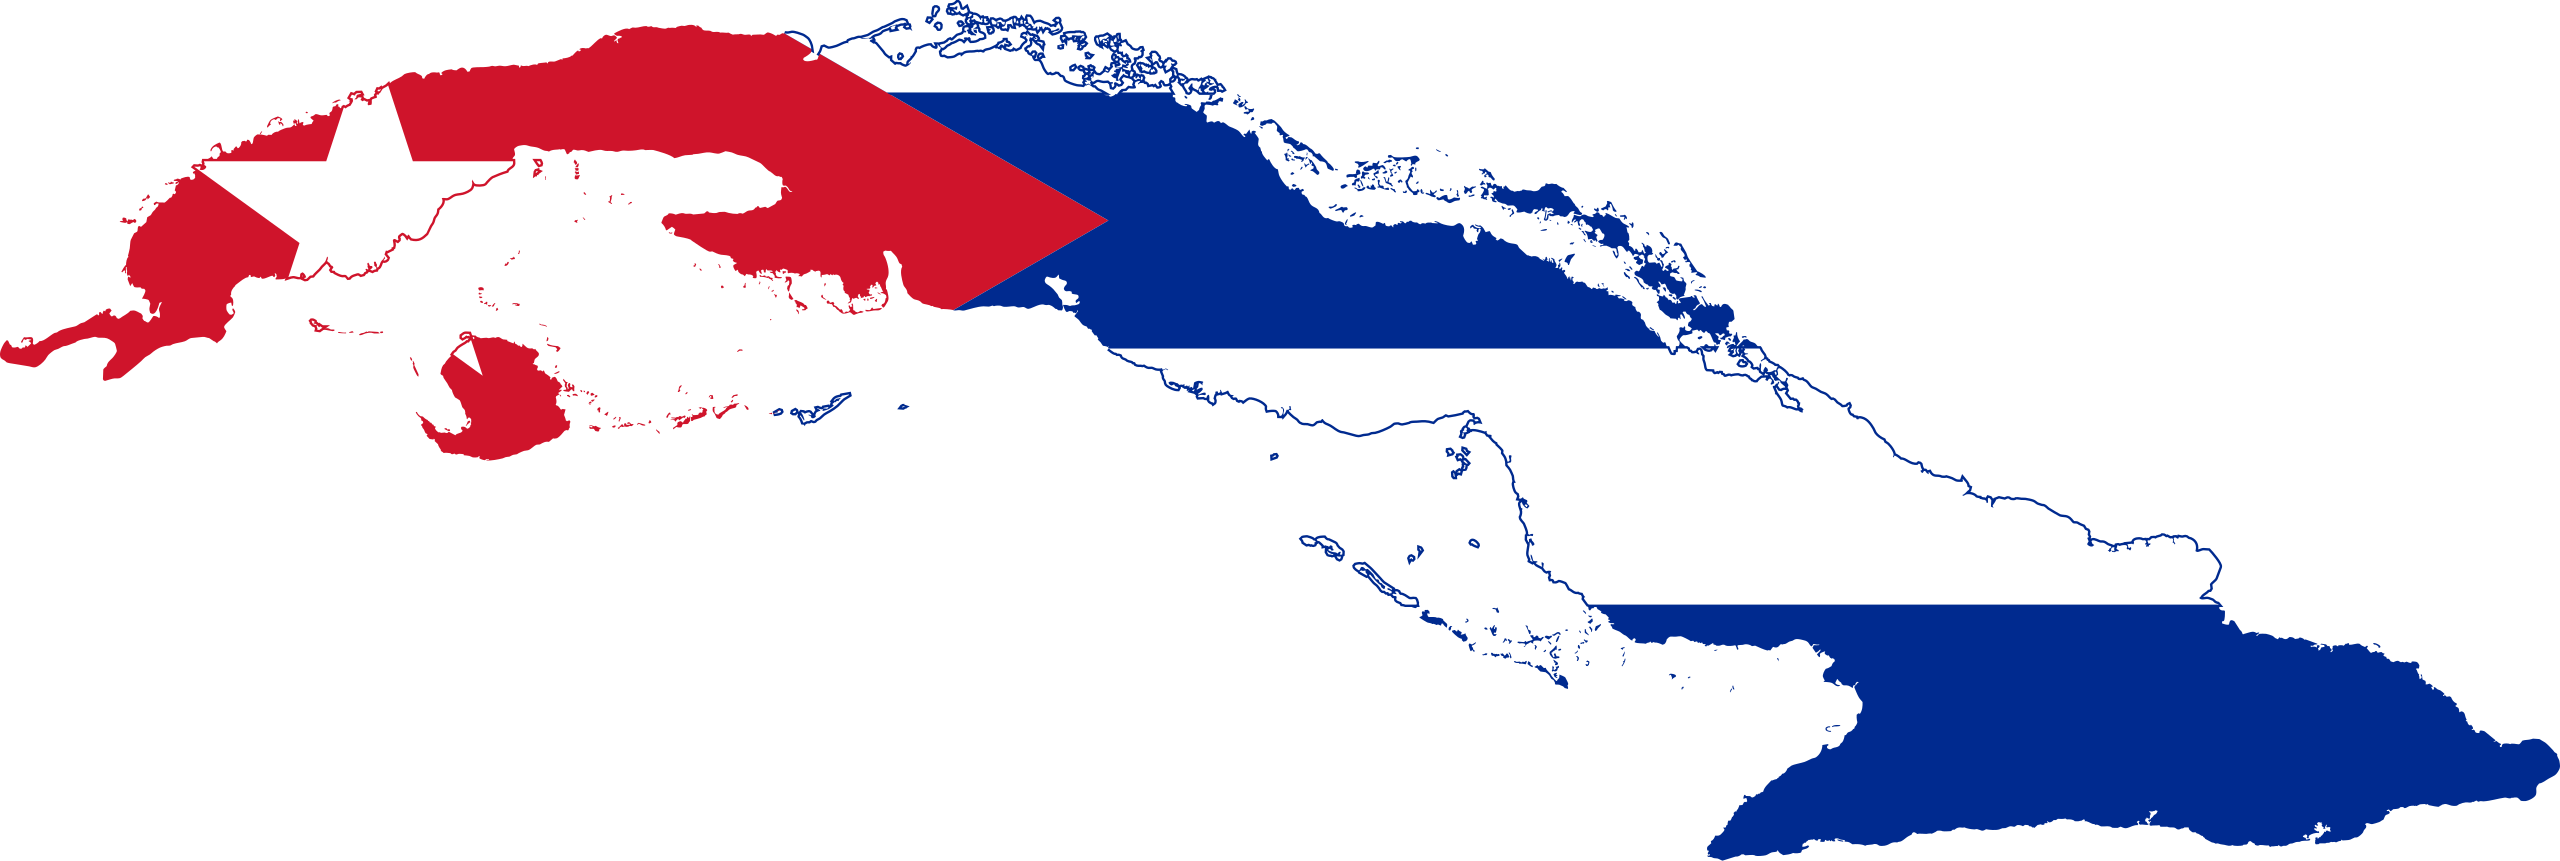 File:Portugal Cuba Locator.png - Wikipedia